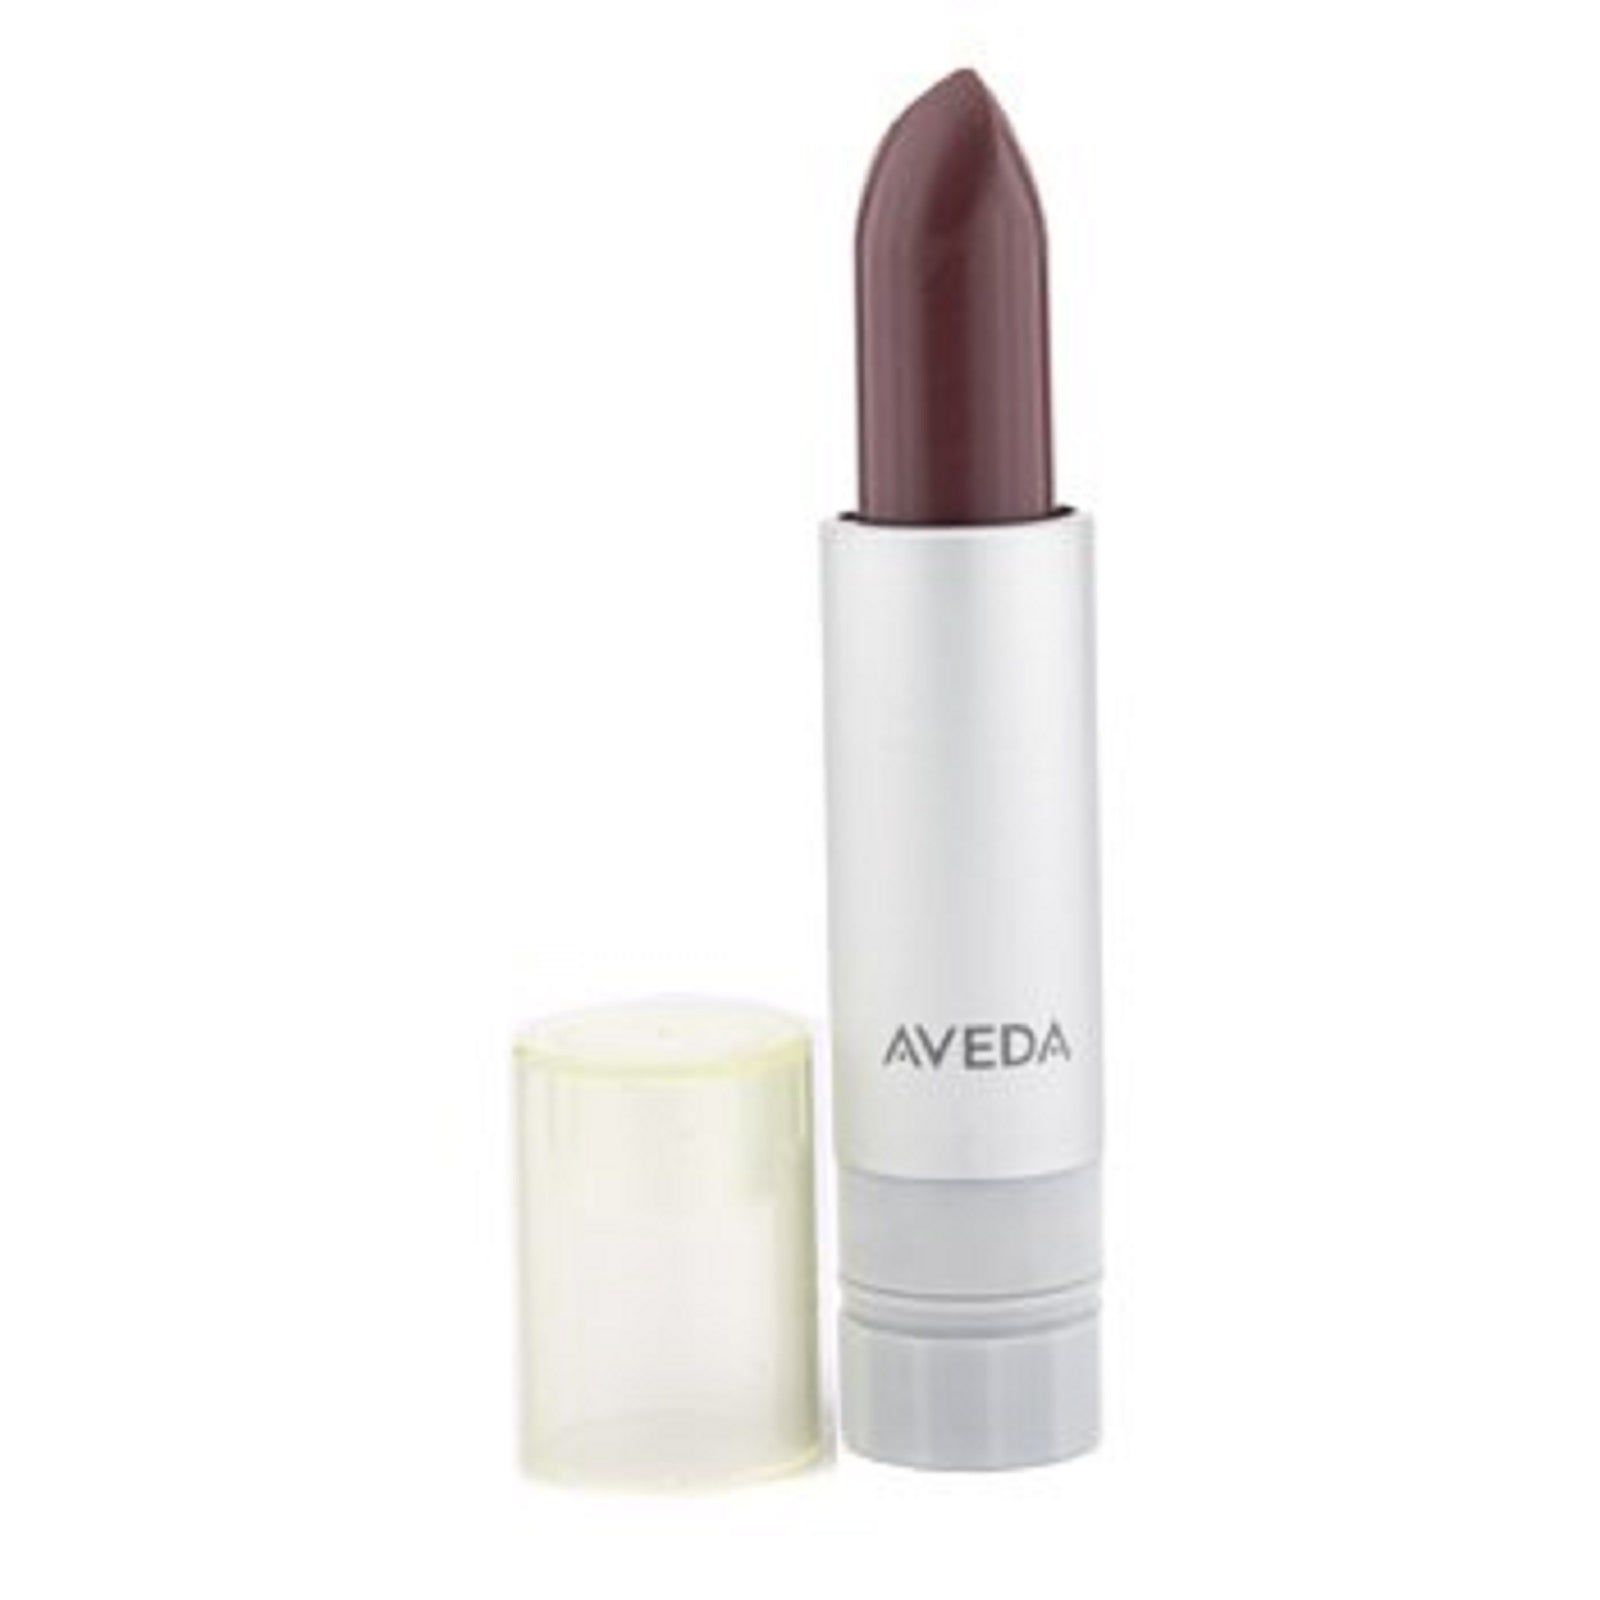 AVEDA new nib lipstick lip color Passion Flower 621 Nourish-Mint discontinued